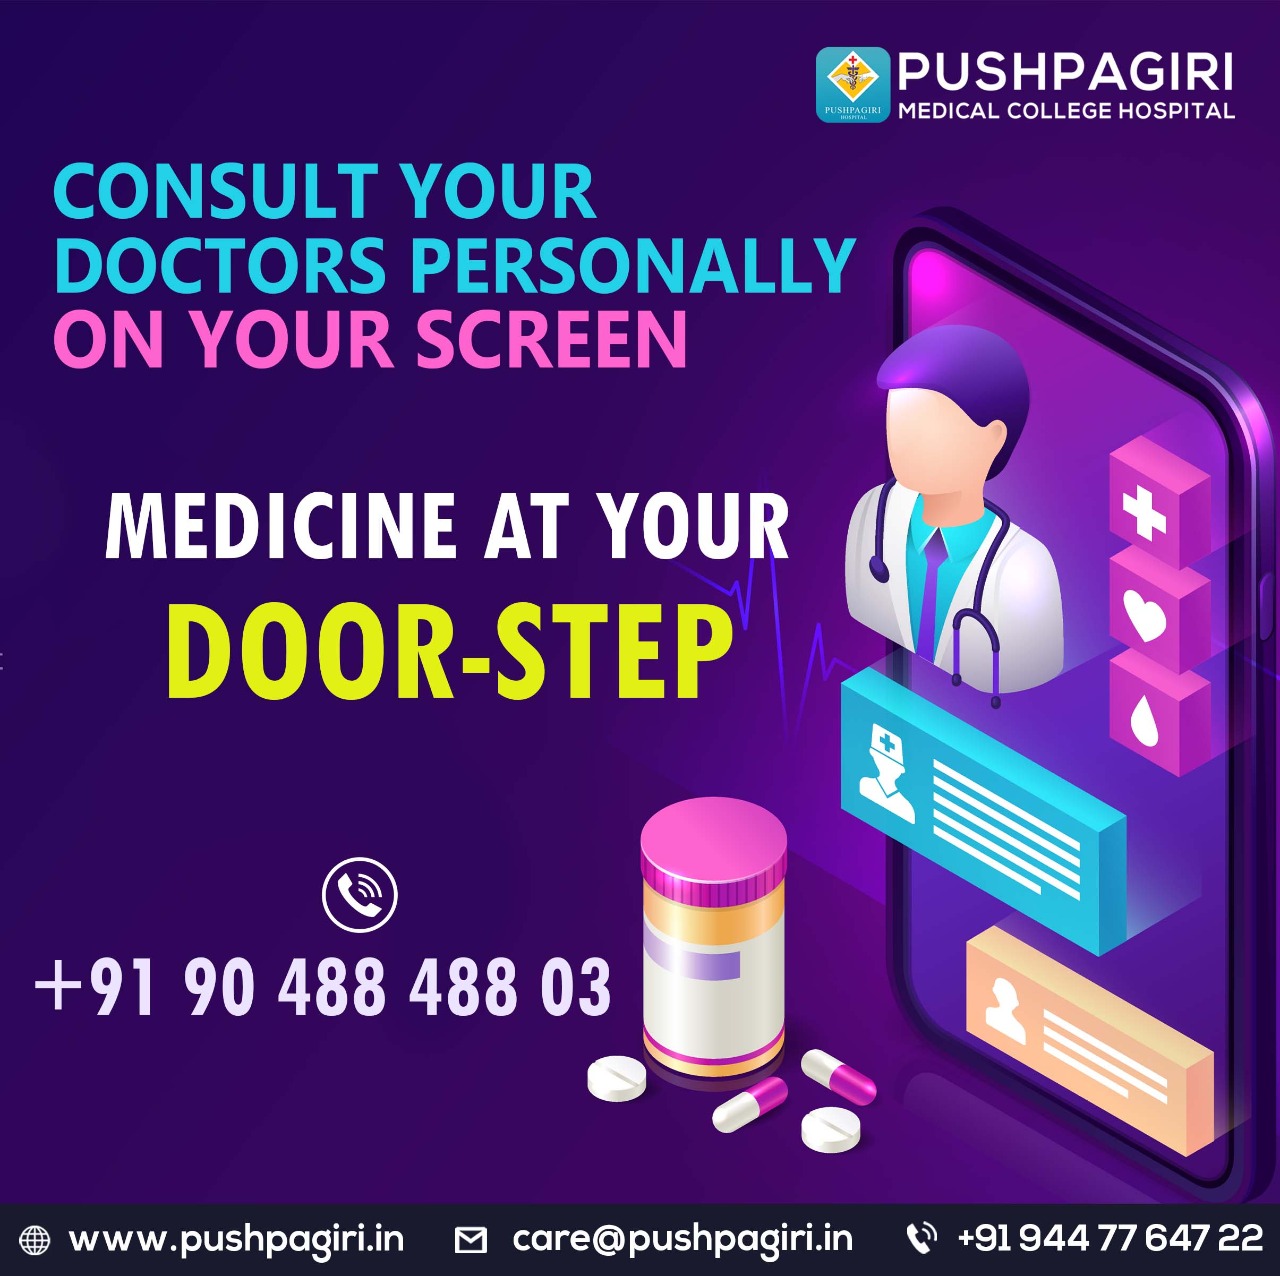 Pushpagiri - Delivering Medicine at your doorsteps